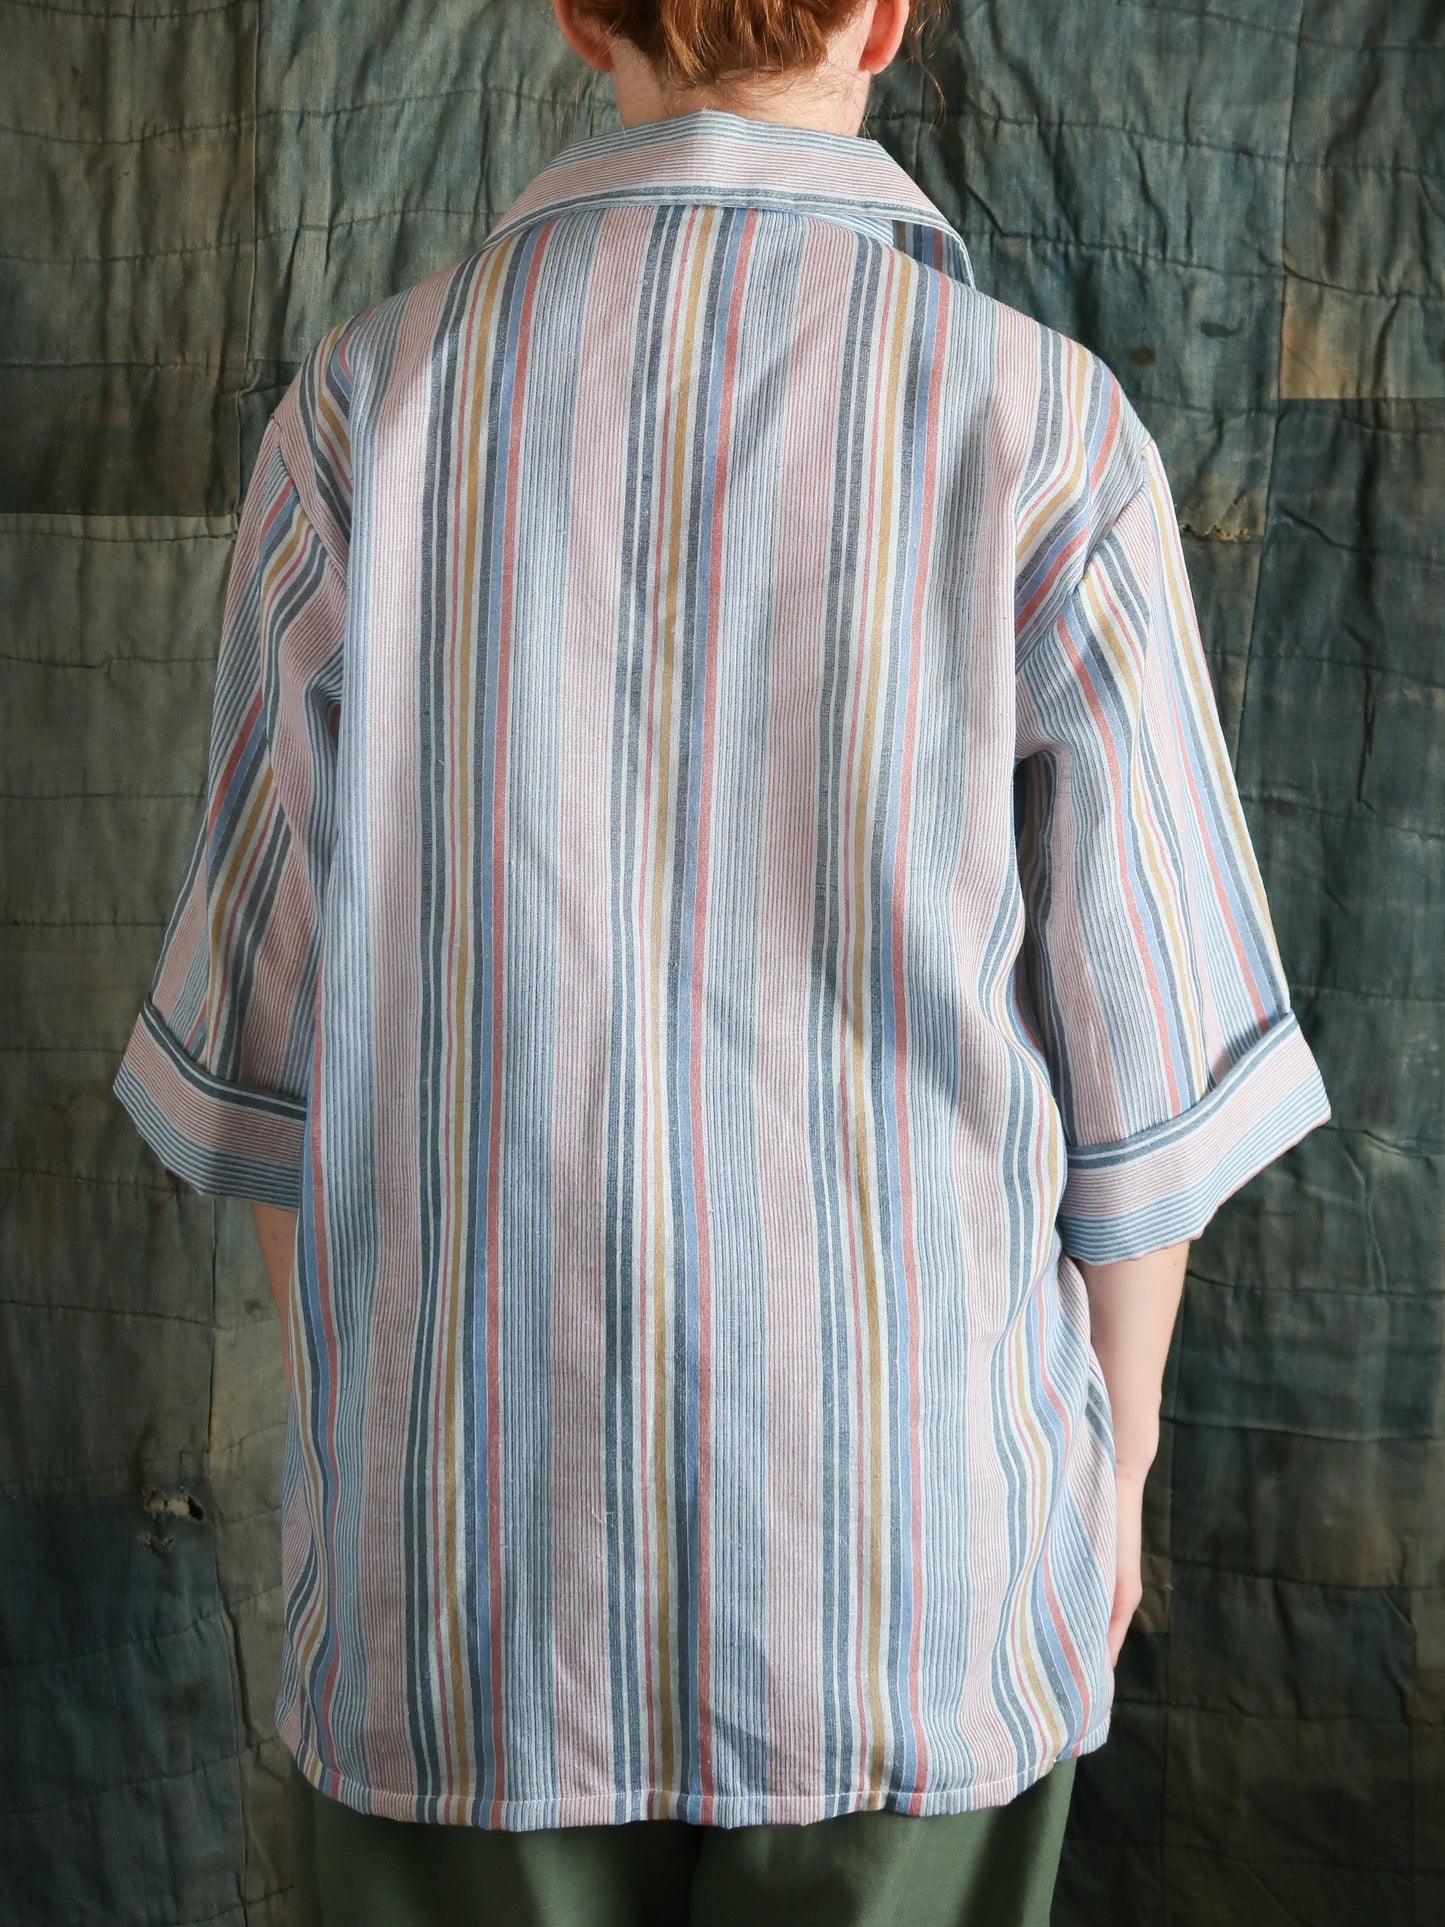 1970s Brent Striped Tunic Shirt Size M/L